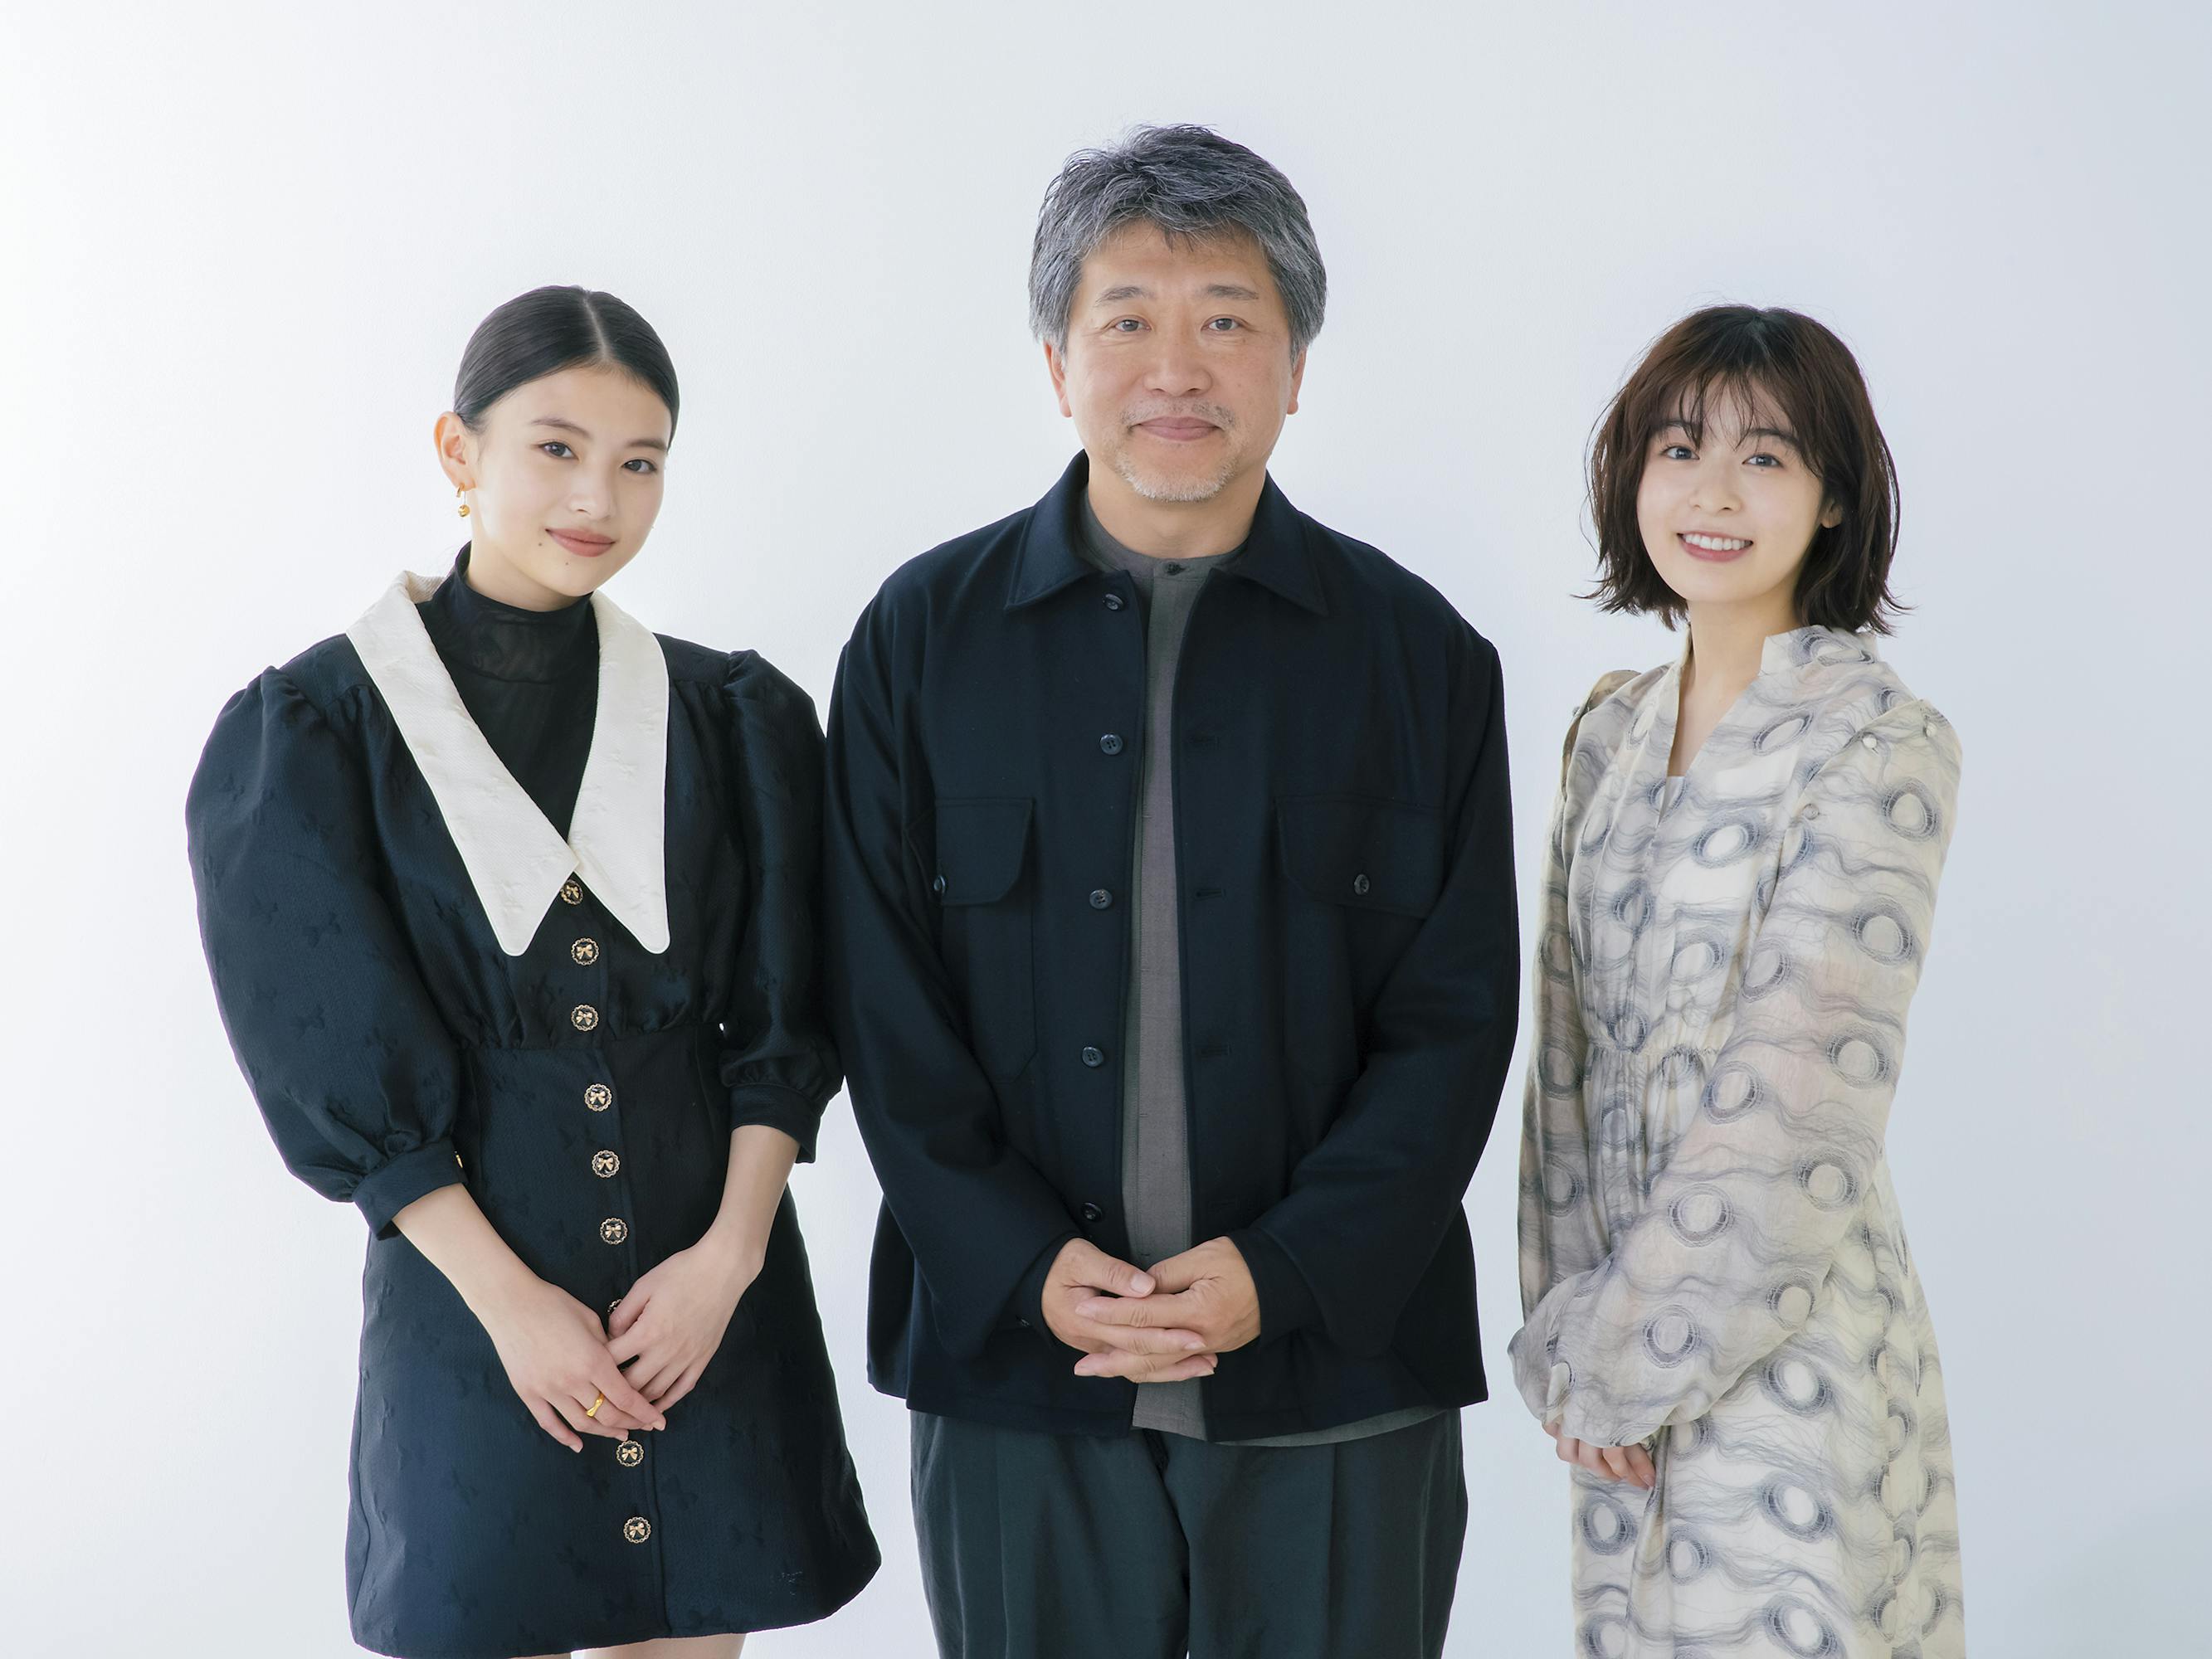 Natsuki Deguchi, Hirokazu Kore-eda, and Nana Mori stand together against a white background. Natsuki wears a black dress with a dramatic white color; Hirokazu wears a dark jacket and a grey t-shirt; Nana wear wear a grey-and-white dress.